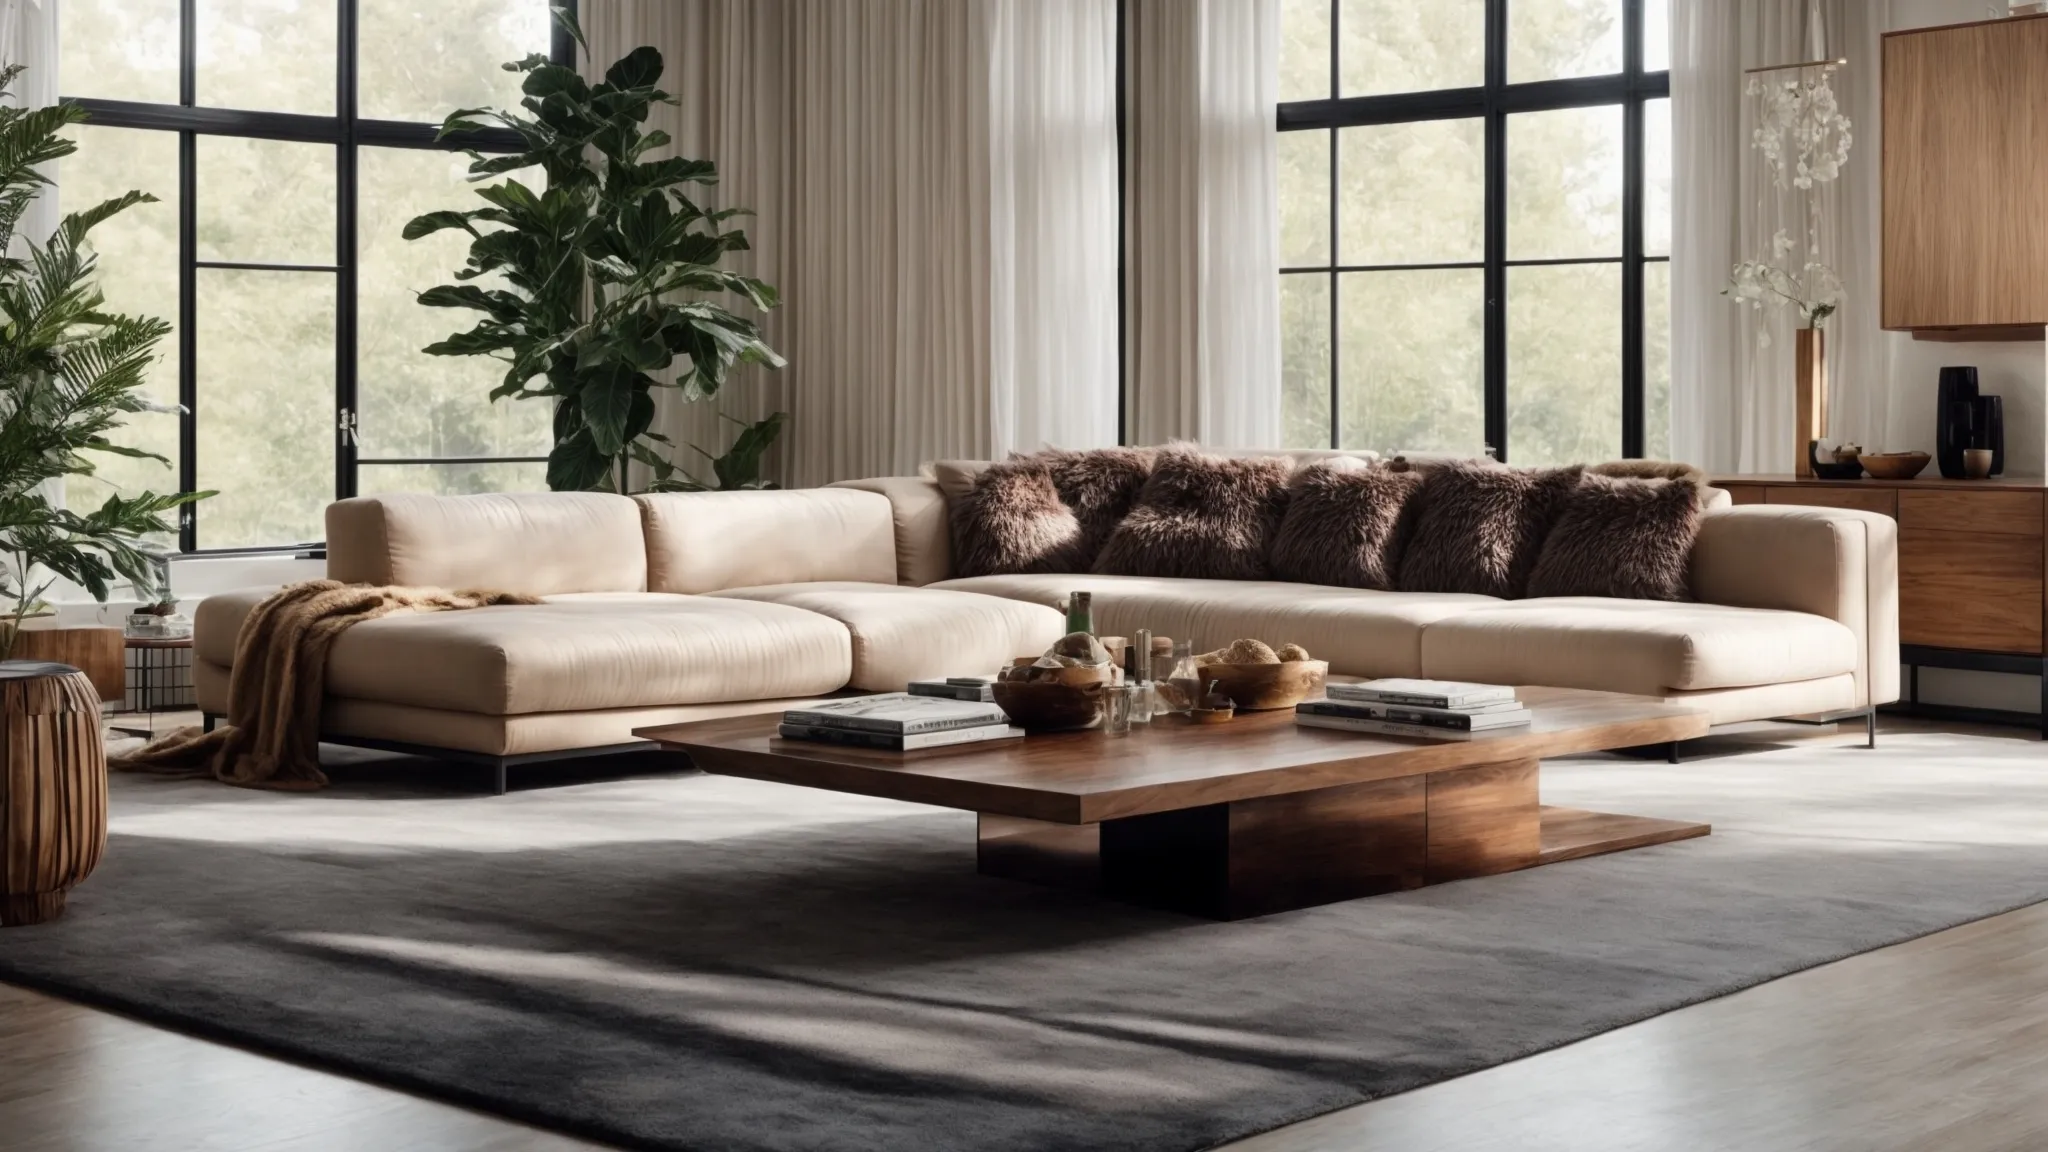 a sleek, modern living room bathed in natural light showcasing elegant furnishings and artful decor.